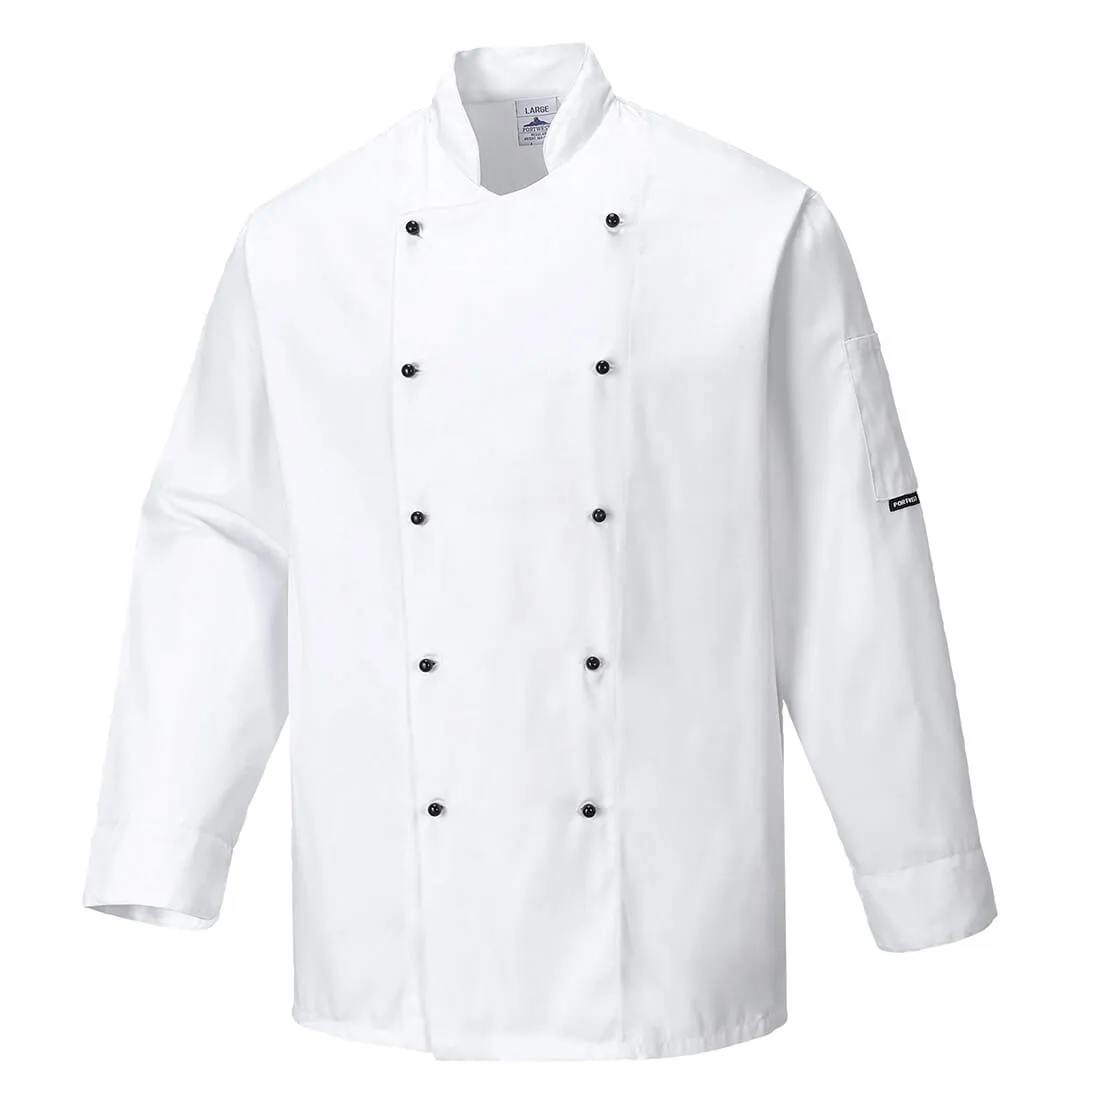 Portwest Unisex Somerset Chefs Jacket - White, L